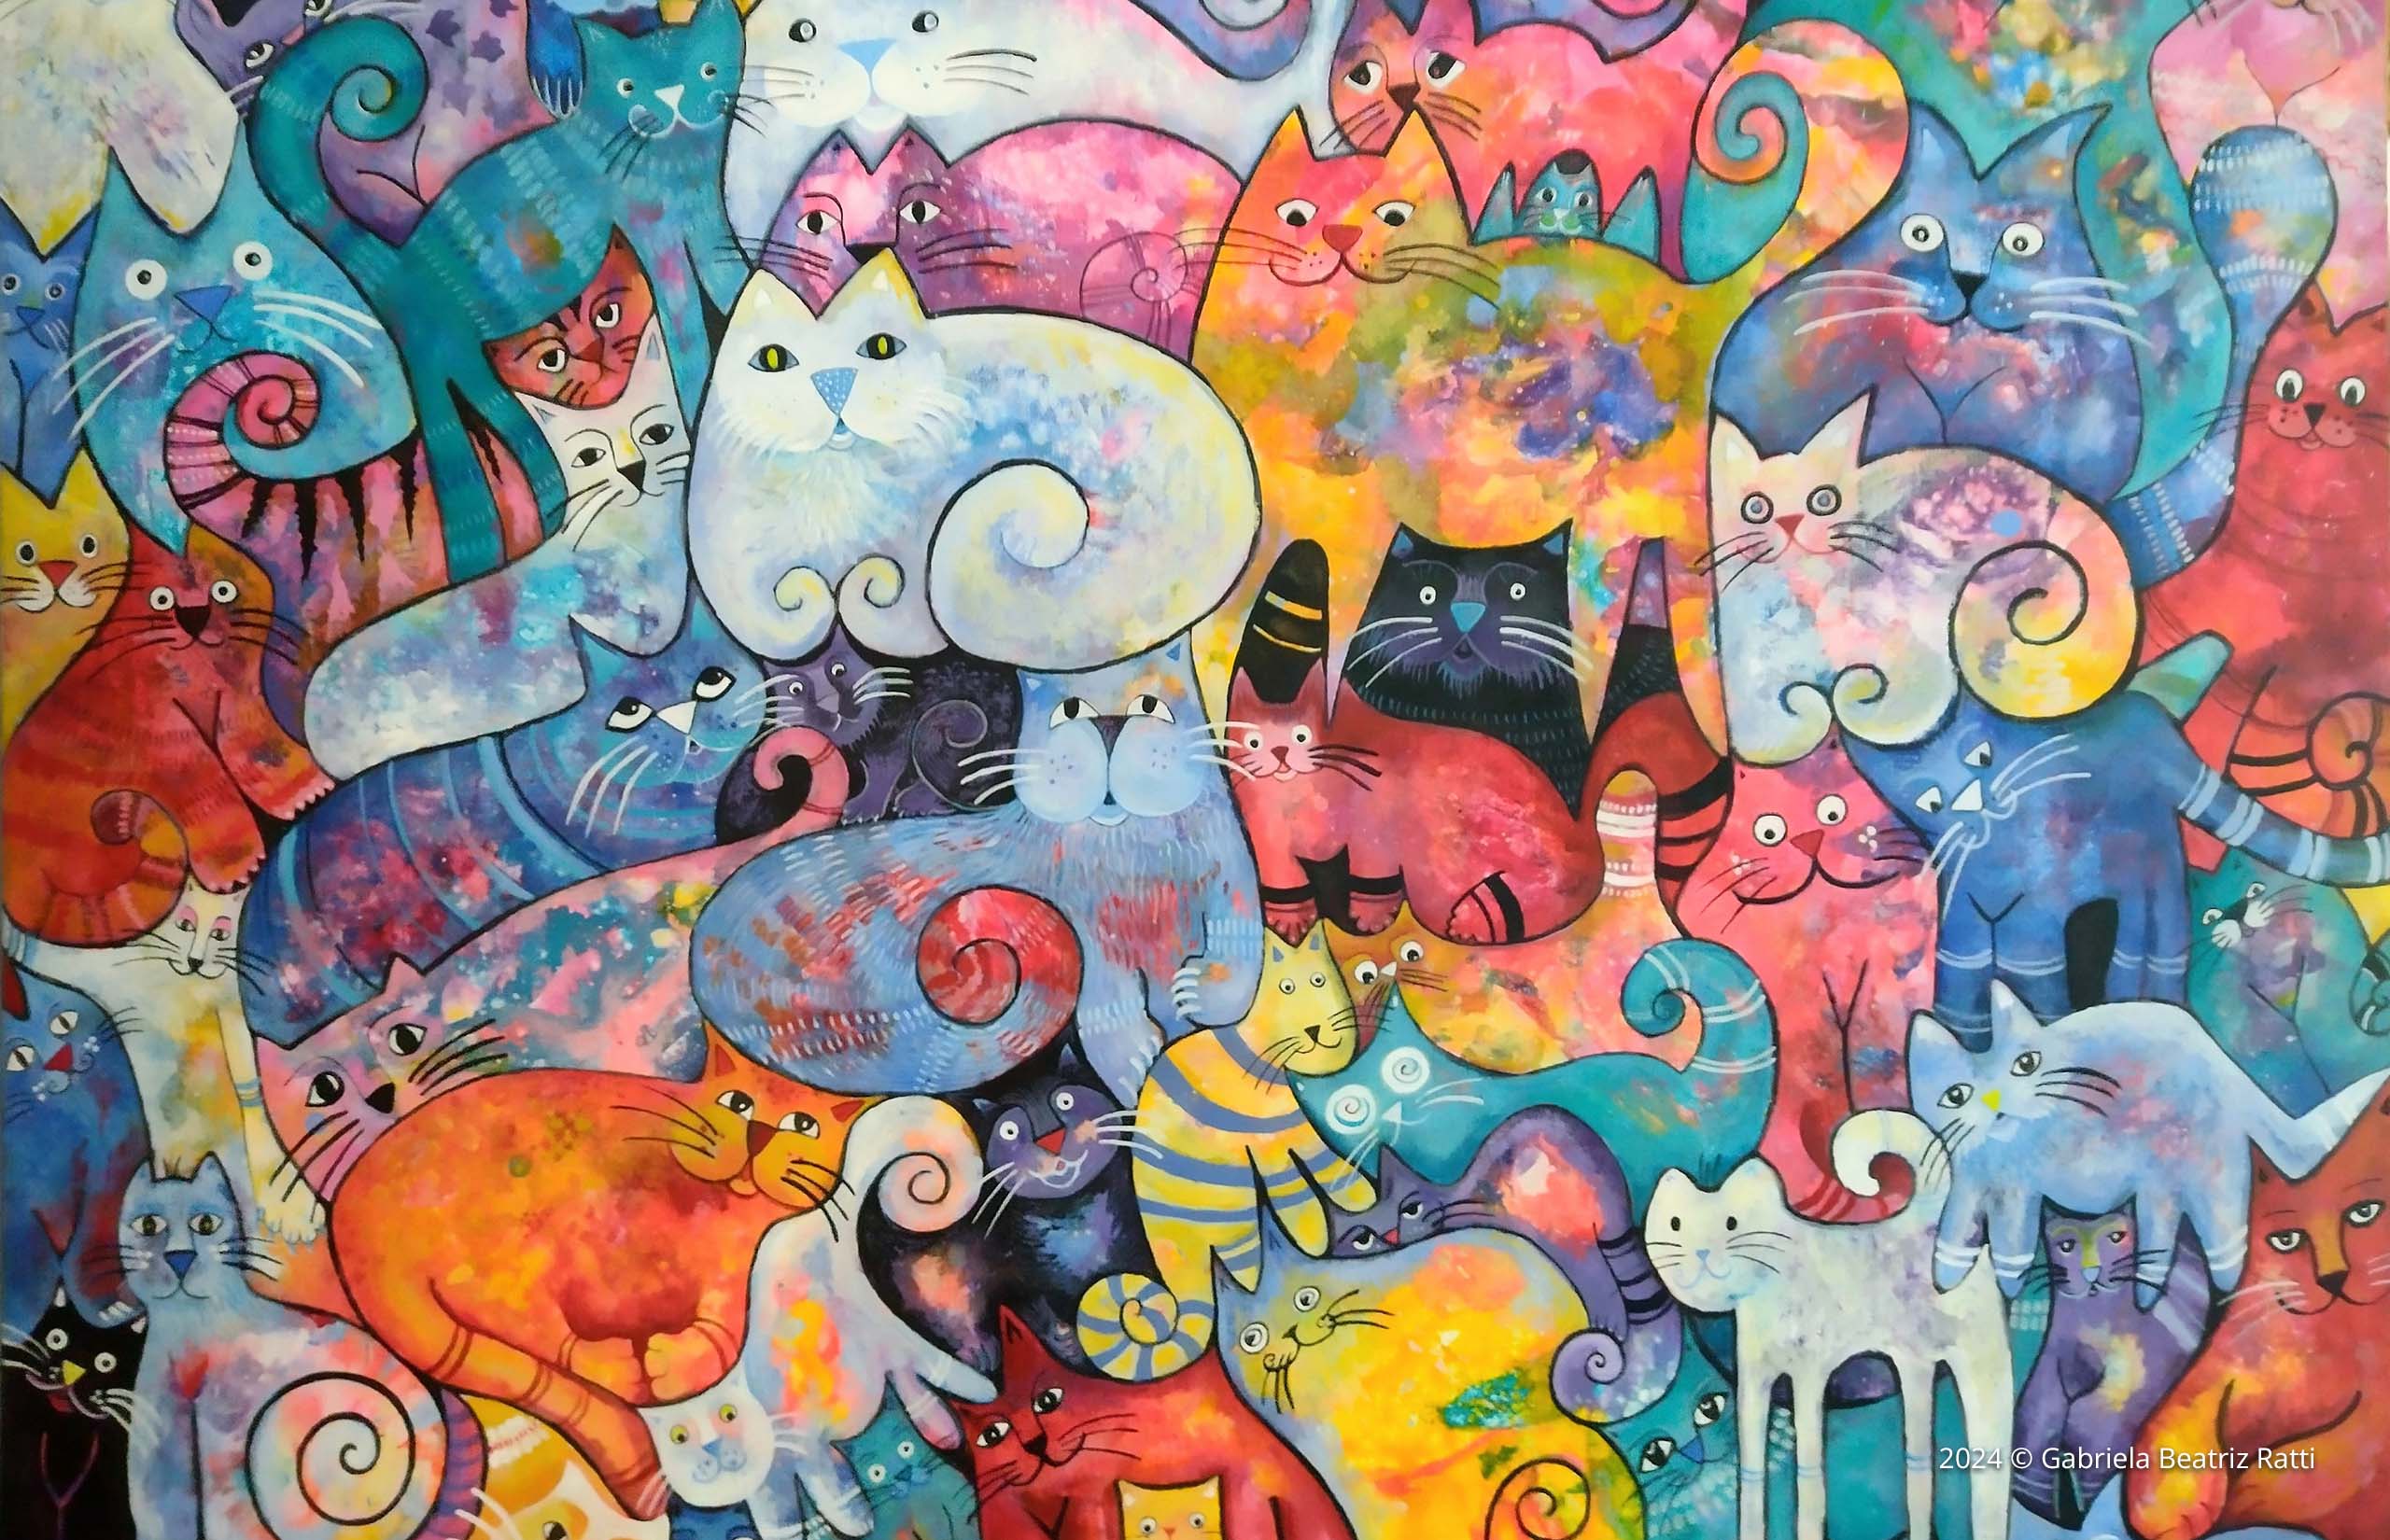 Cute & colorful cat art